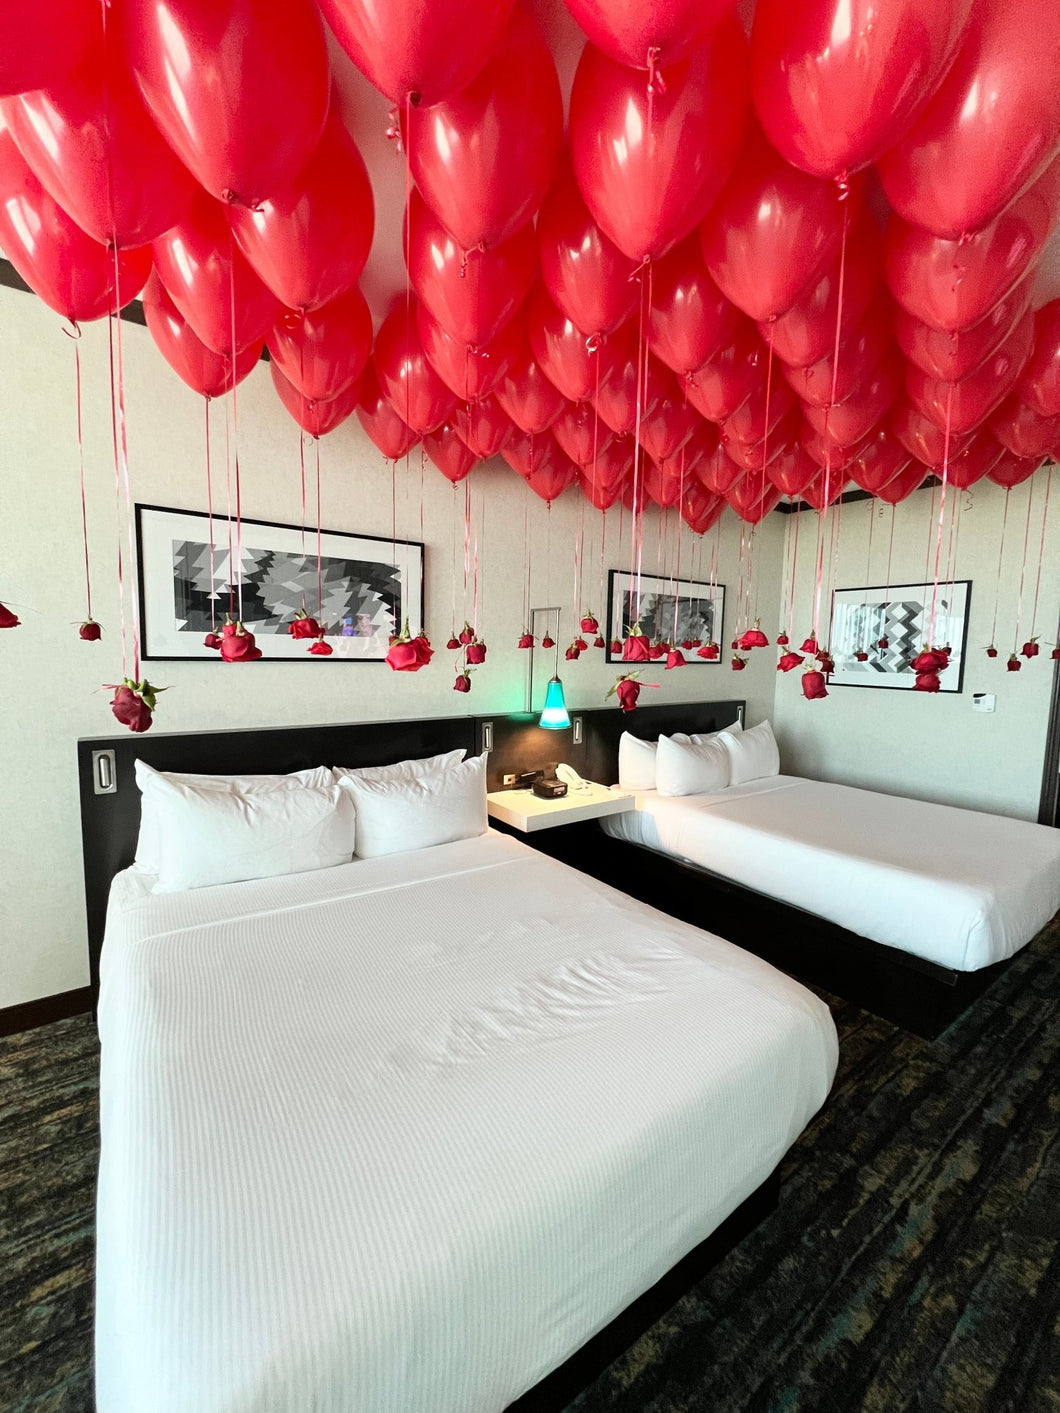 Floating Roses Room Decor – Lush Balloons